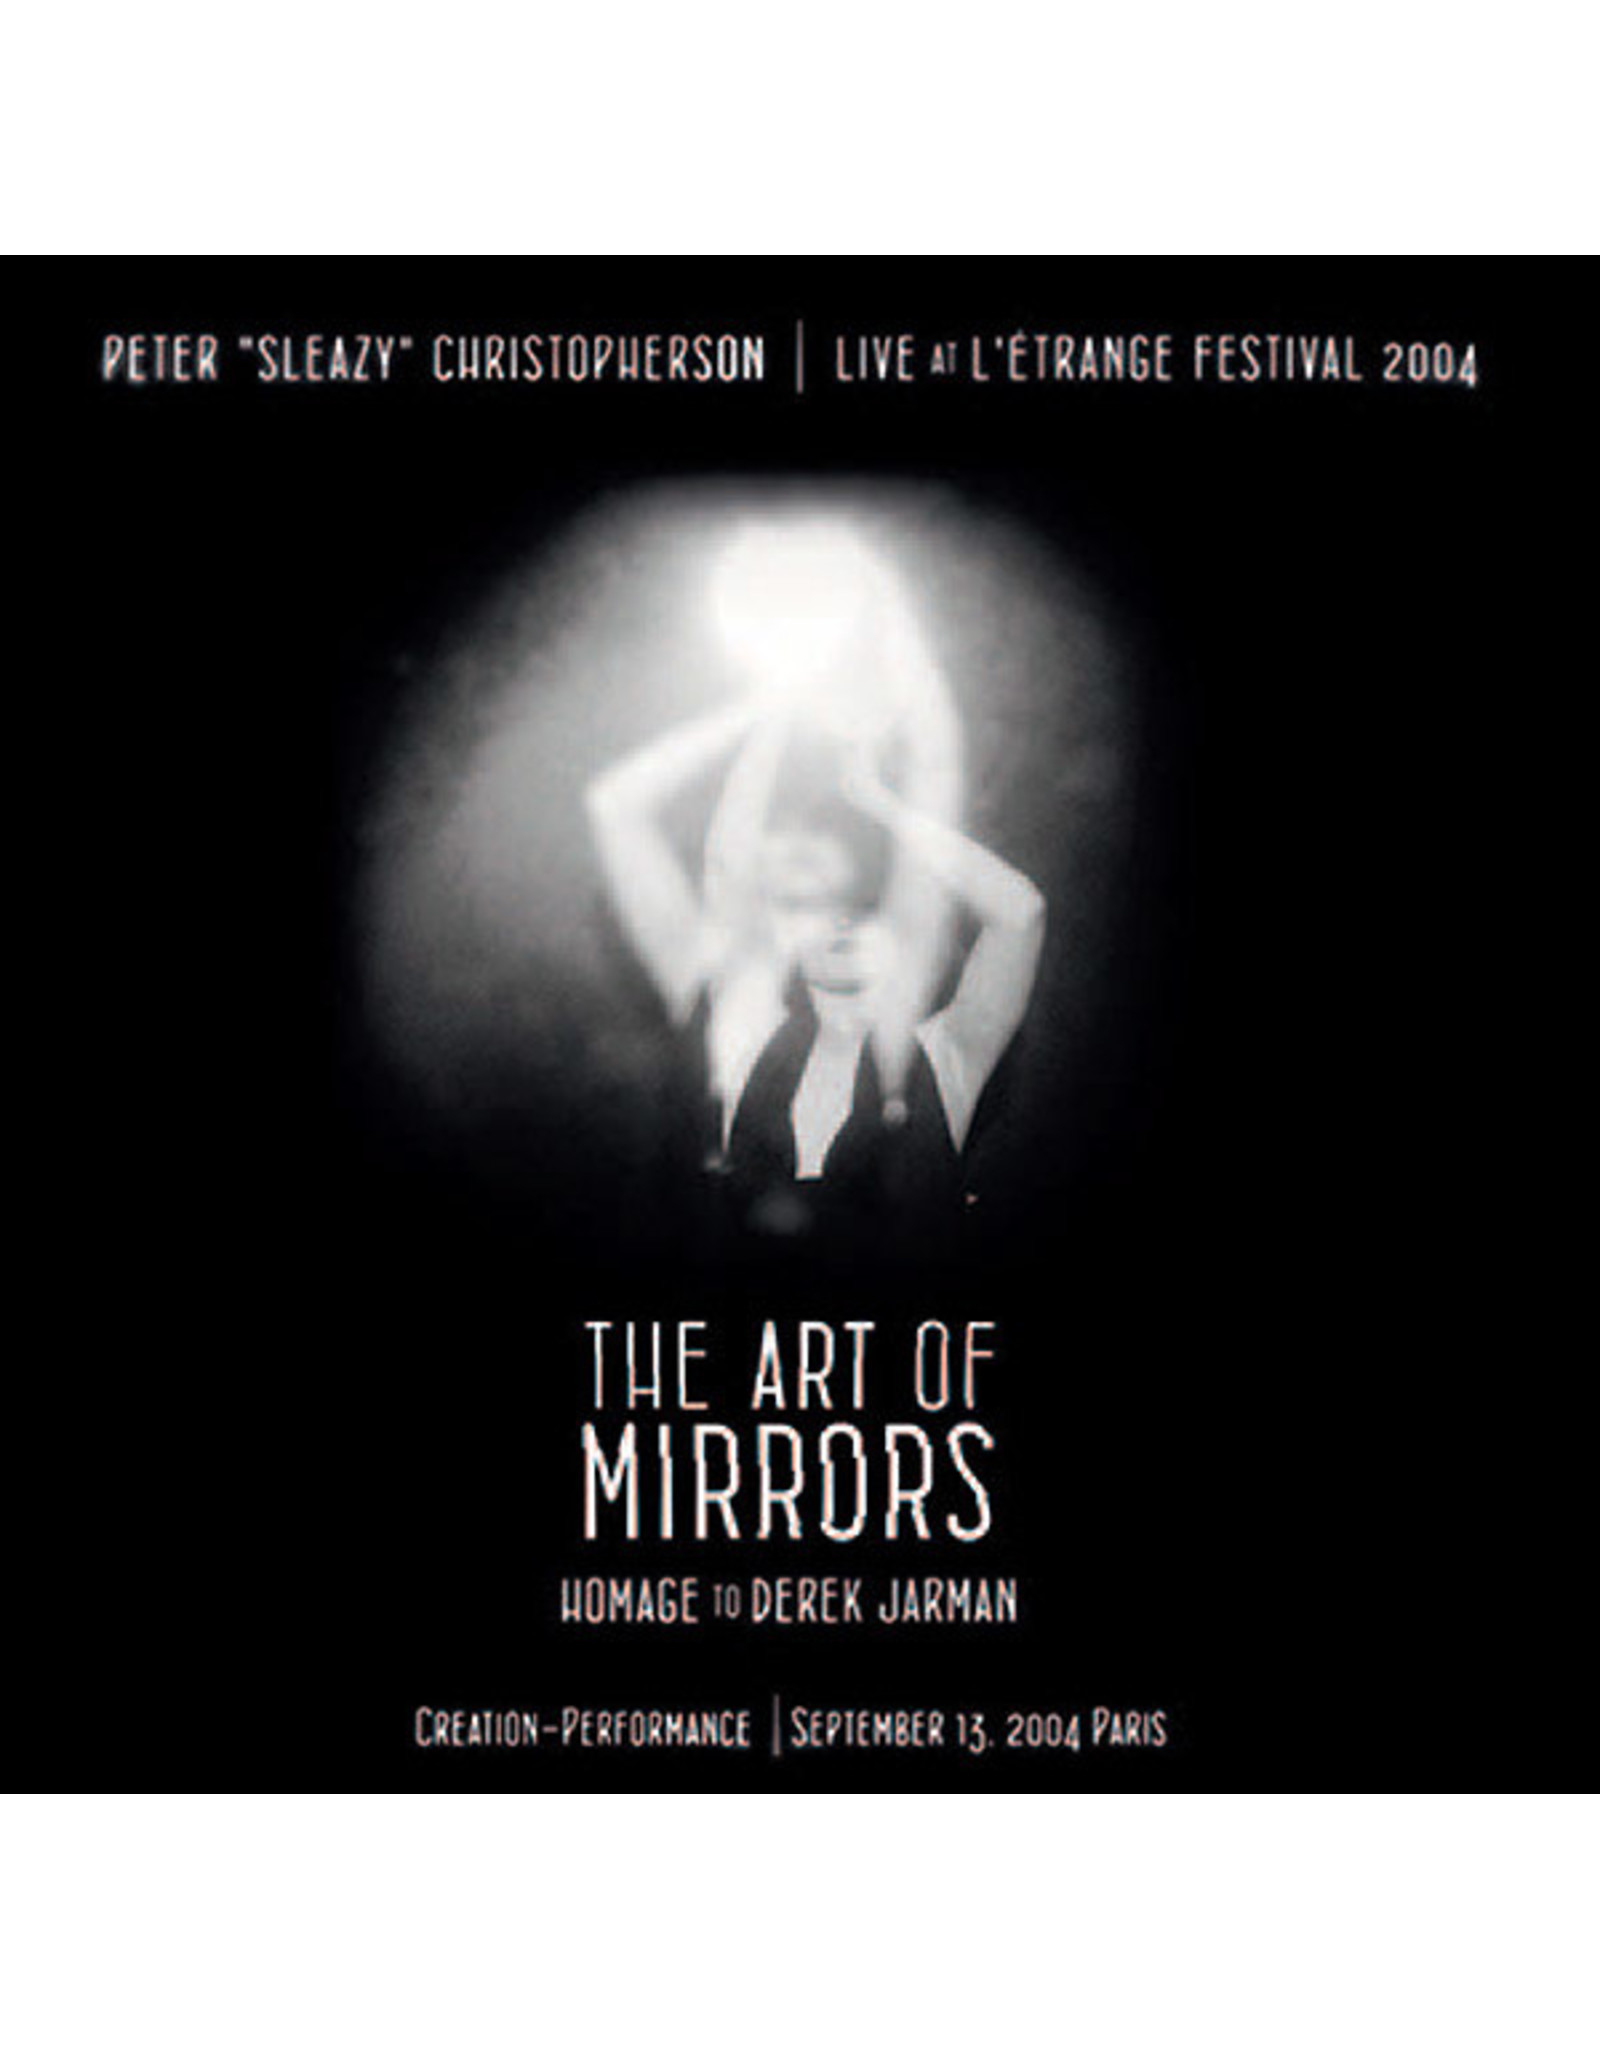 Black Mass Rising Christopherson, Peter 'Sleazy': Art of Mirrors LP